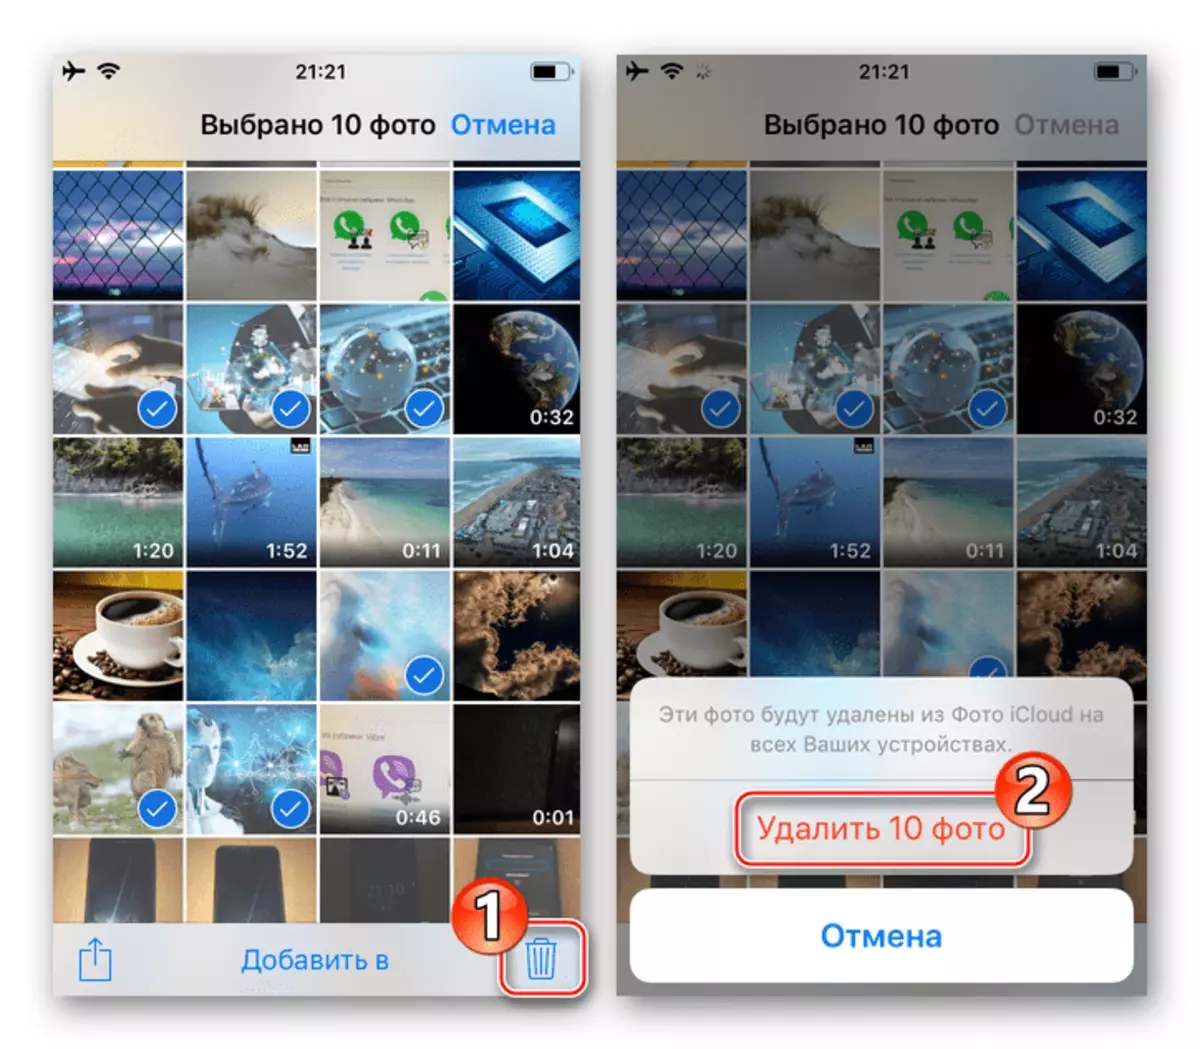 iPhone အတွက် Viber သည် iOS Photo Program မှတဆင့် Messenger မှတစ်ဆင့်လက်ခံရရှိသည့်ရုပ်ပုံများကိုဖယ်ရှားခြင်း